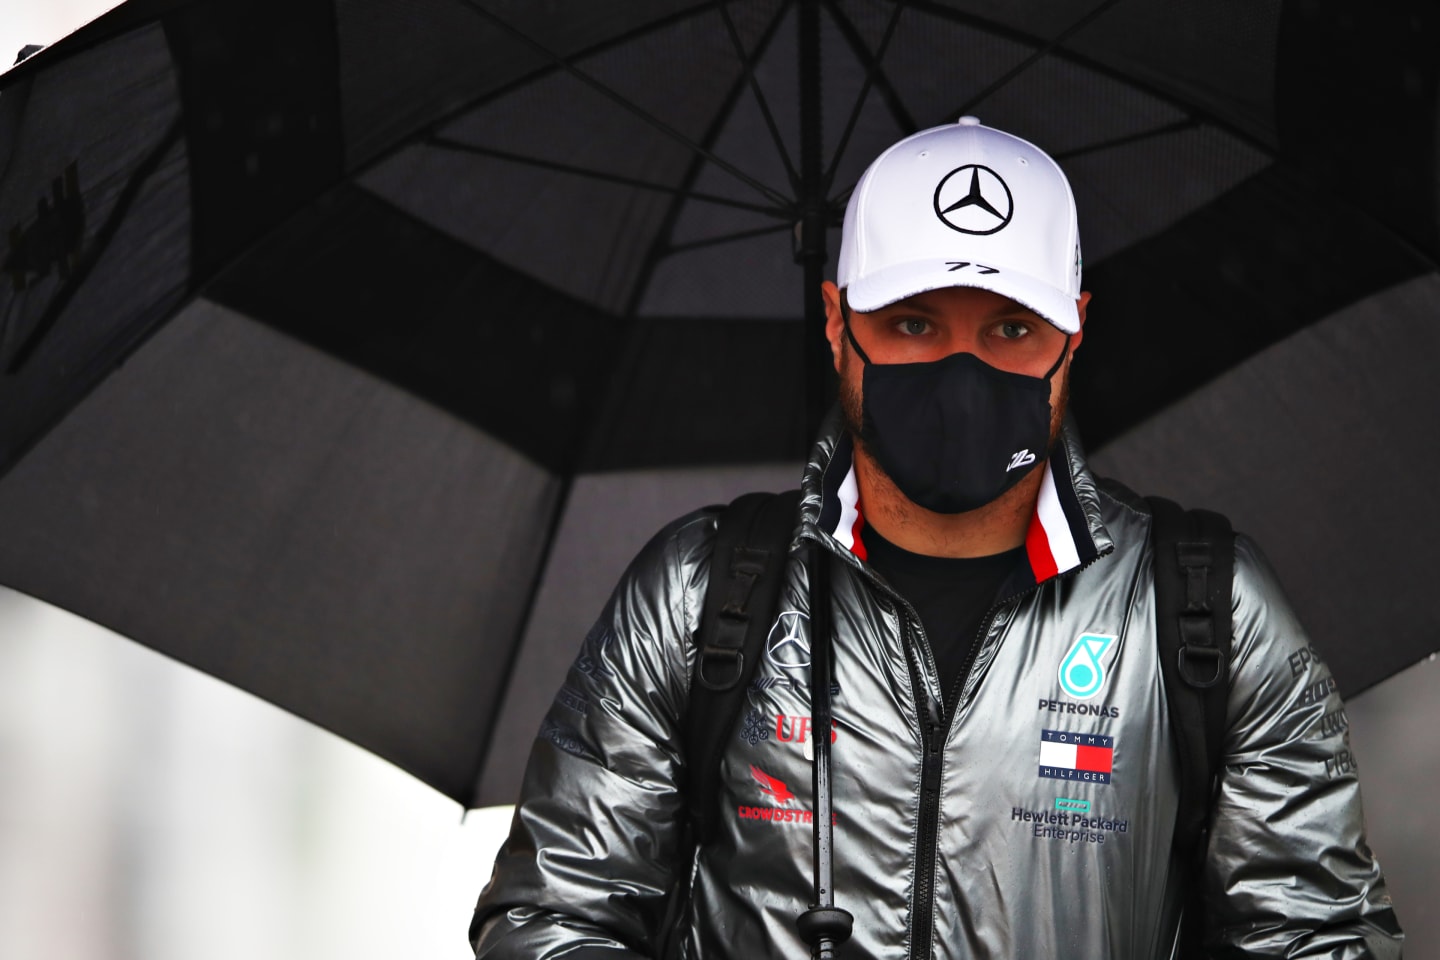 NUERBURG, GERMANY - OCTOBER 09: Valtteri Bottas of Finland and Mercedes GP walks in the Paddock